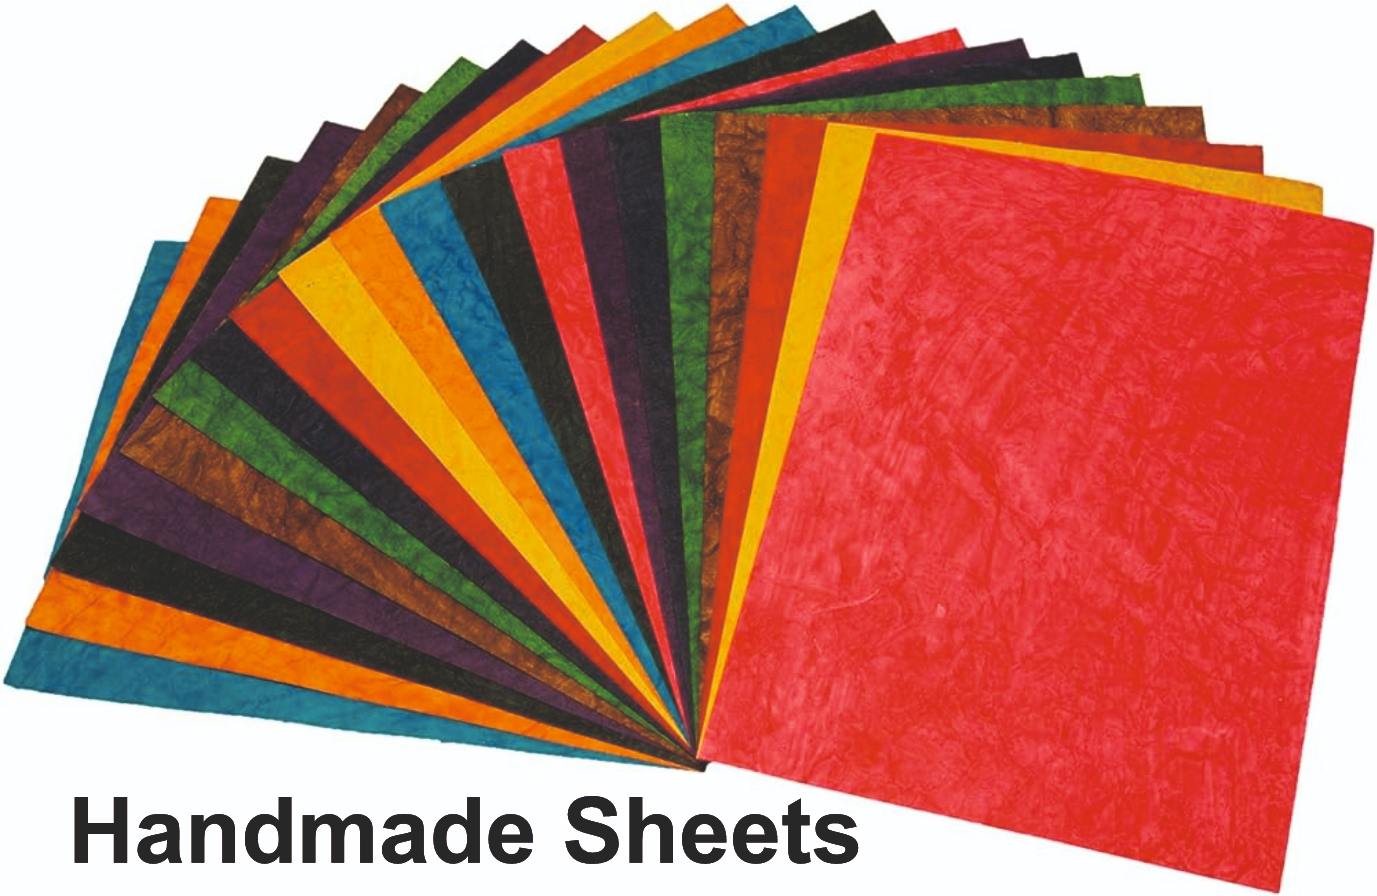 Handmade Sheets